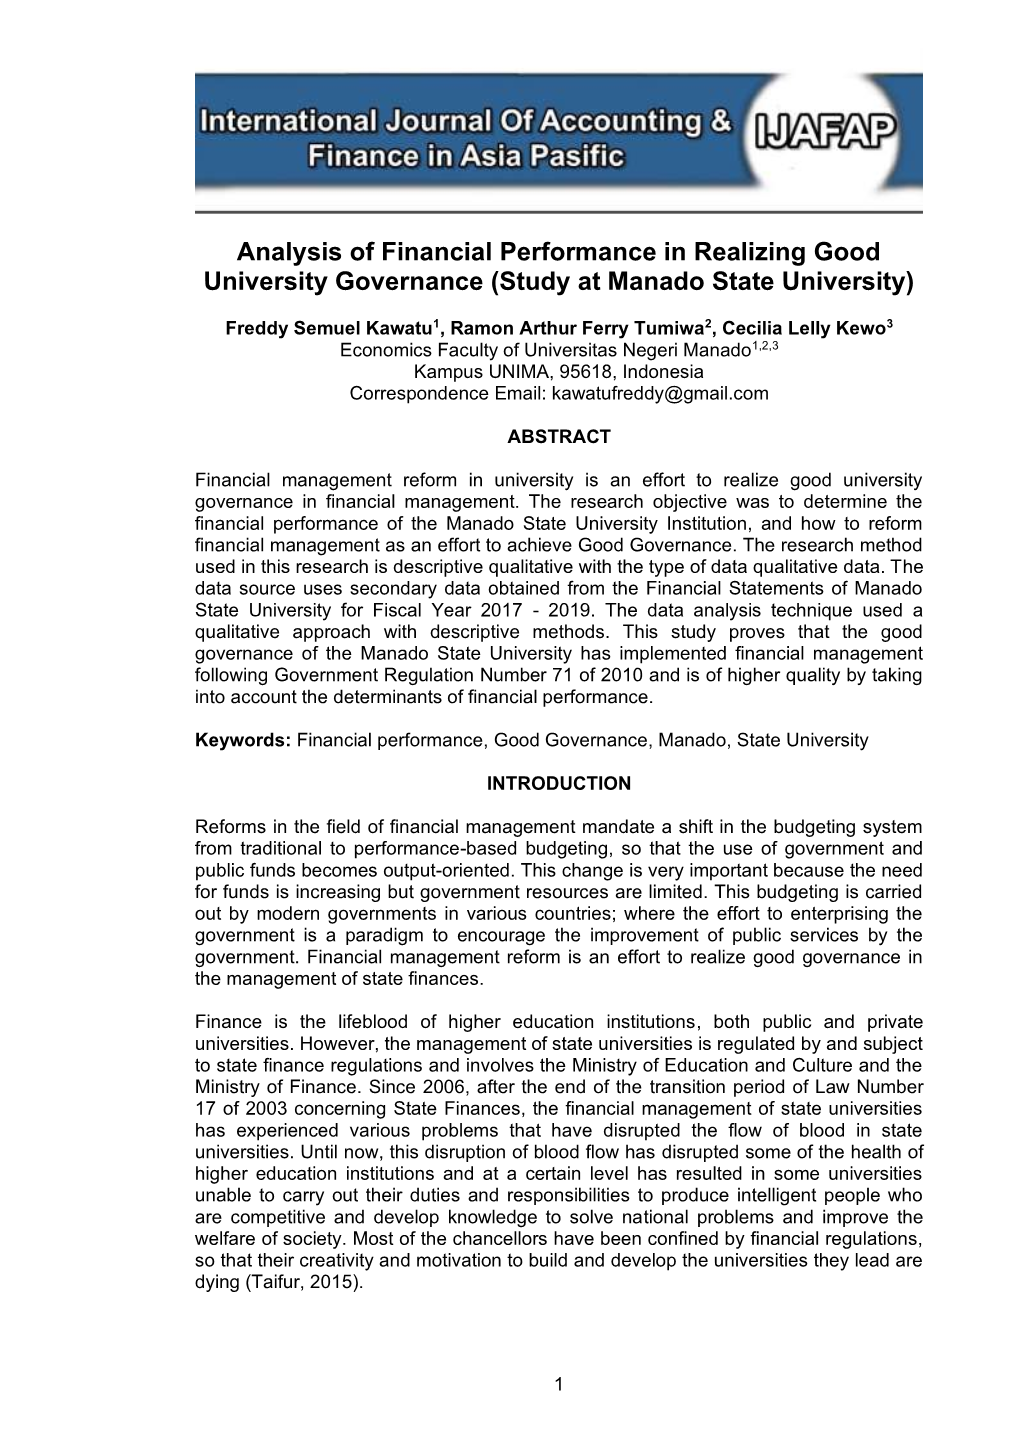 Analysis of Financial Performance in Realizing Good University Governance (Study at Manado State University)